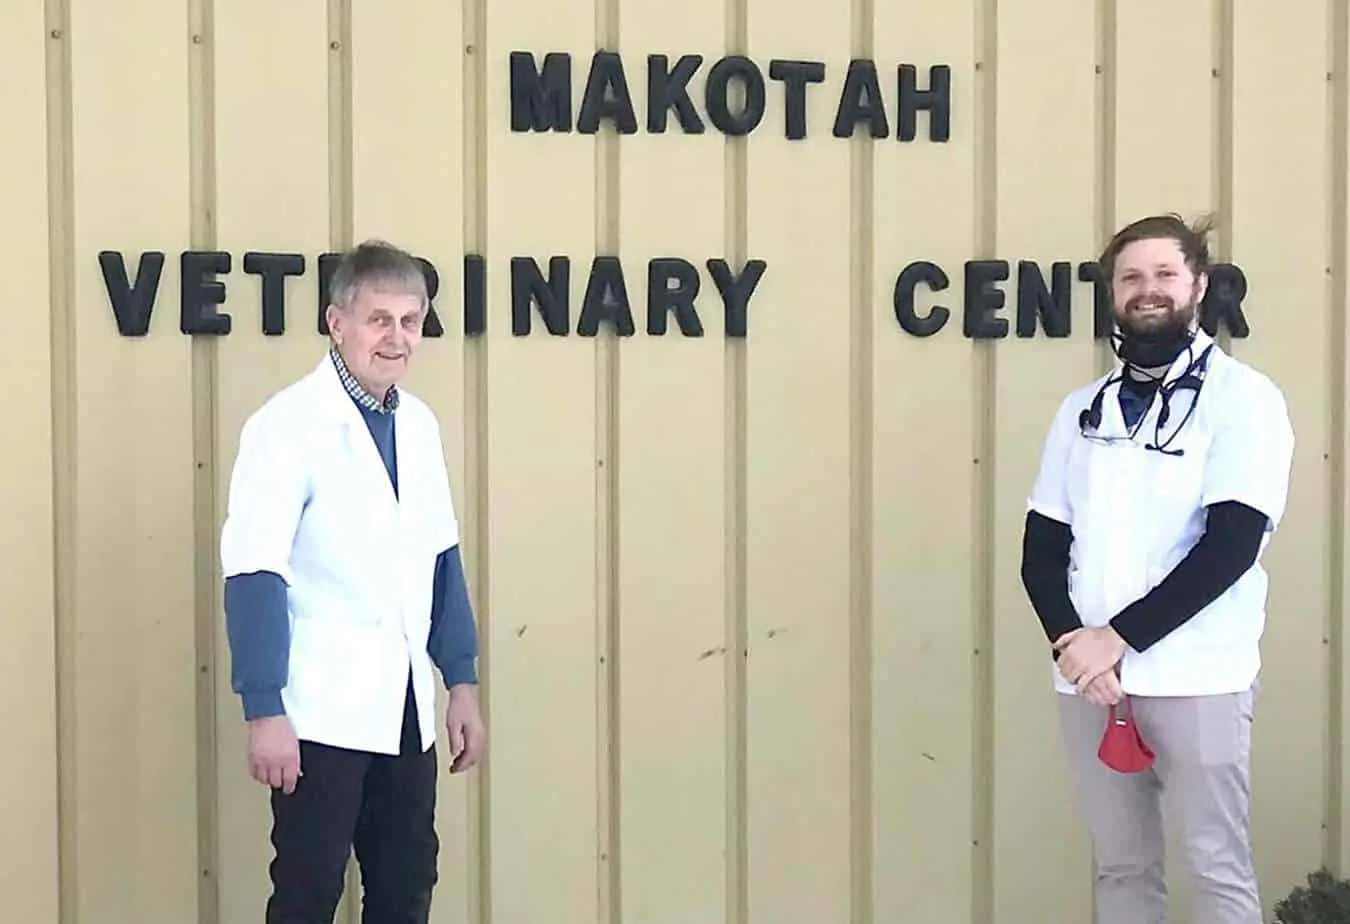 Dr. Robert Bogan and Dr. Zach Adams standing in front of Makotah Veterinary Center